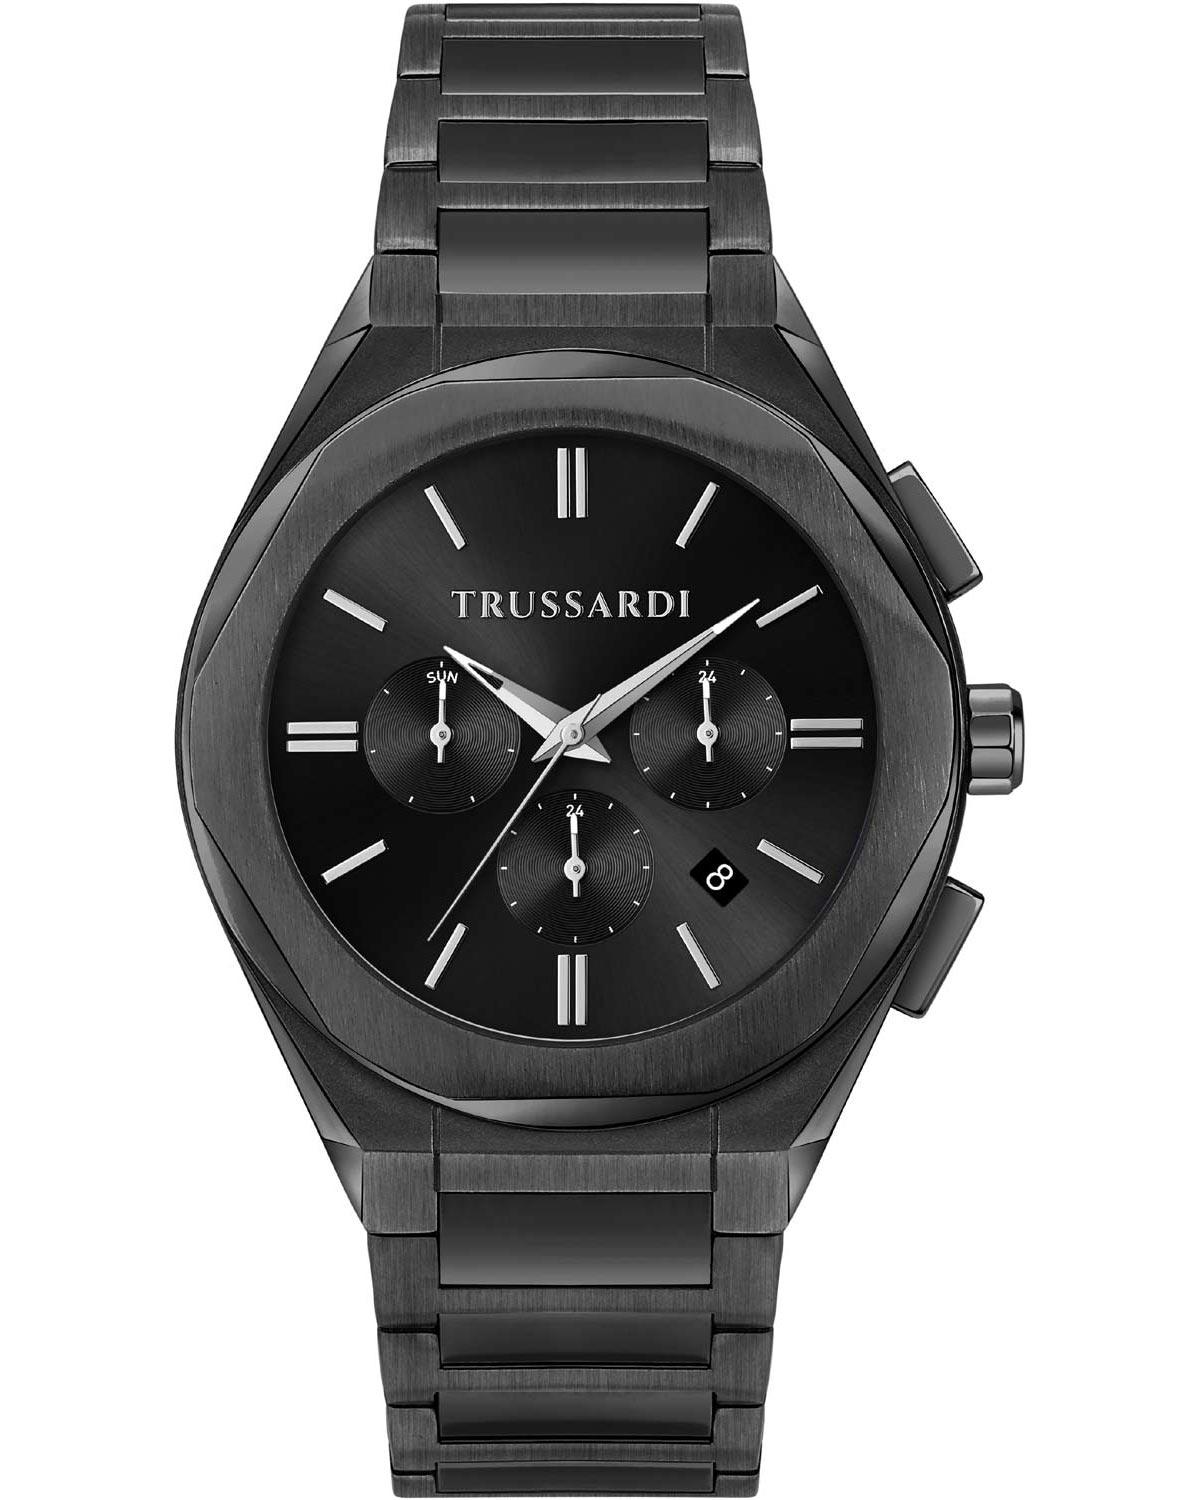 TRUSSARDI Brink Dual Time - R2453156002, Black case with Stainless Steel Bracelet